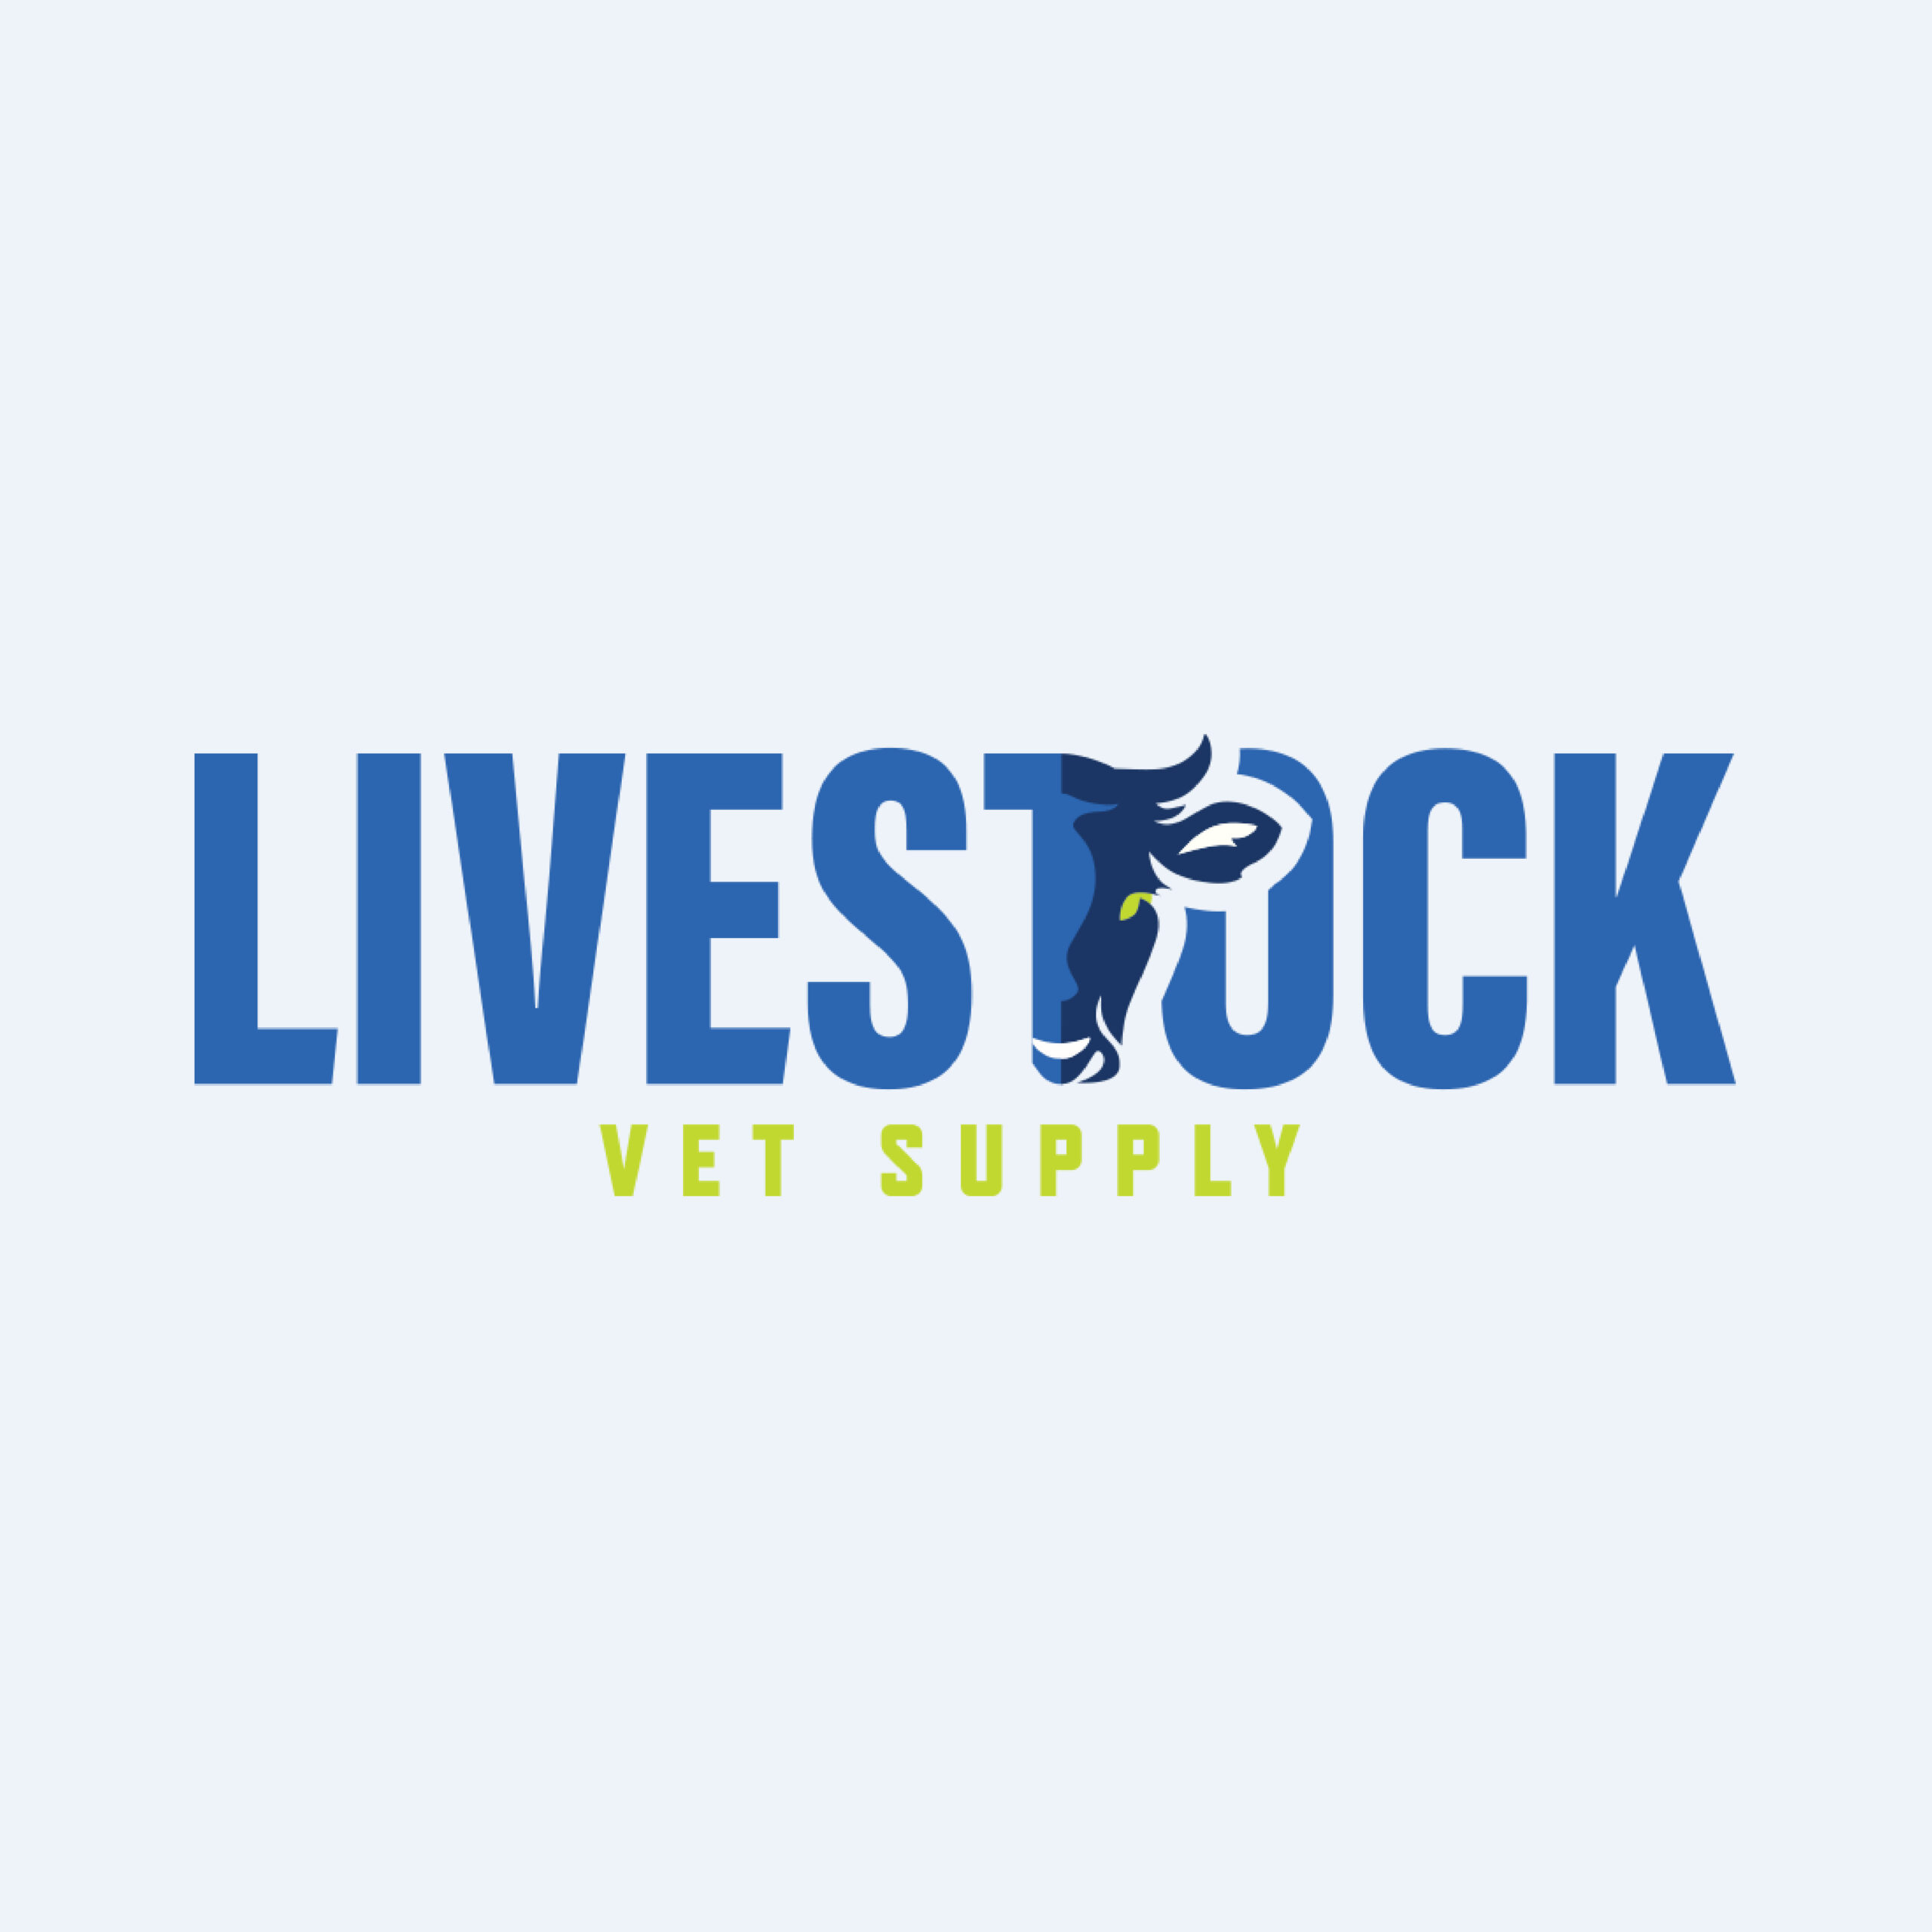 Livestock-Vet-1000x1000-01